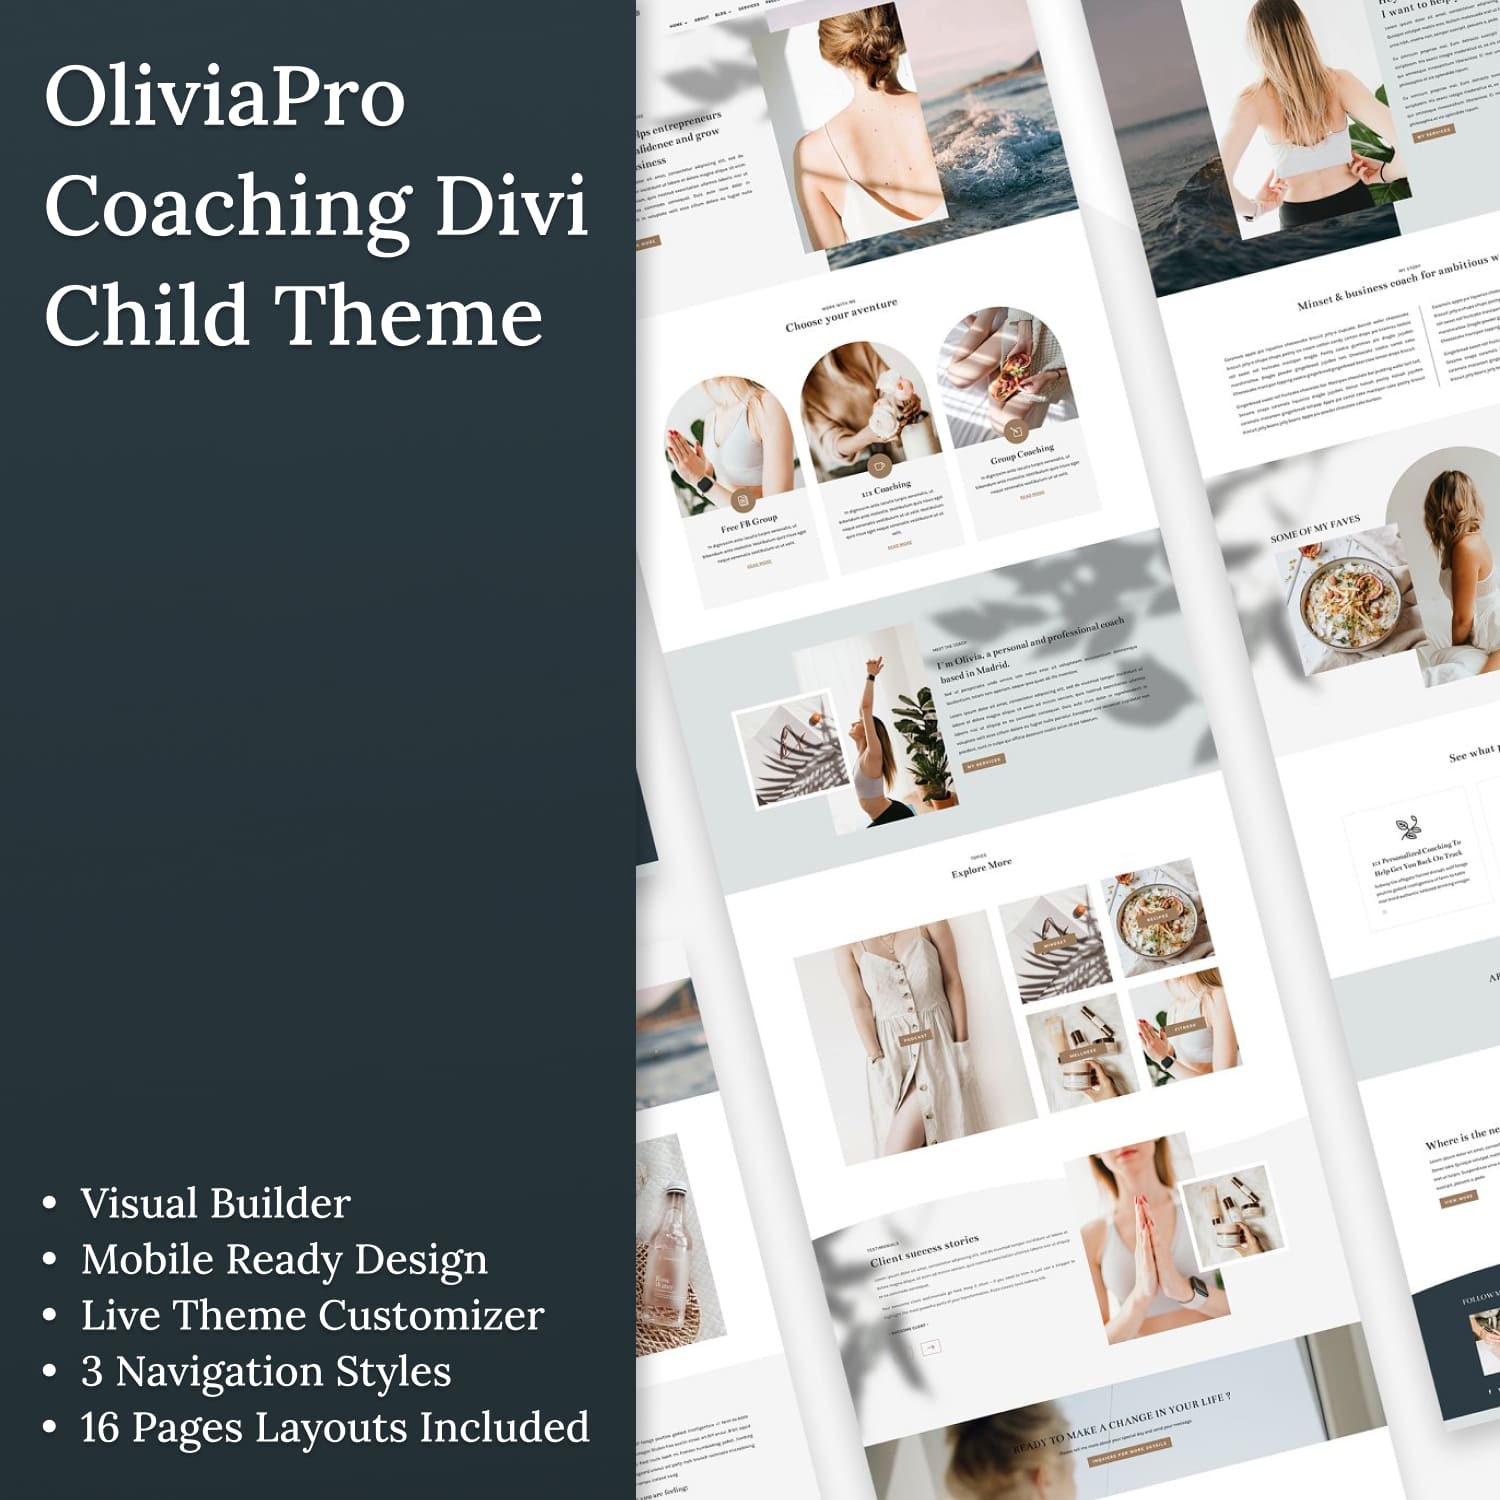 OliviaPro Coaching Divi Child Theme.